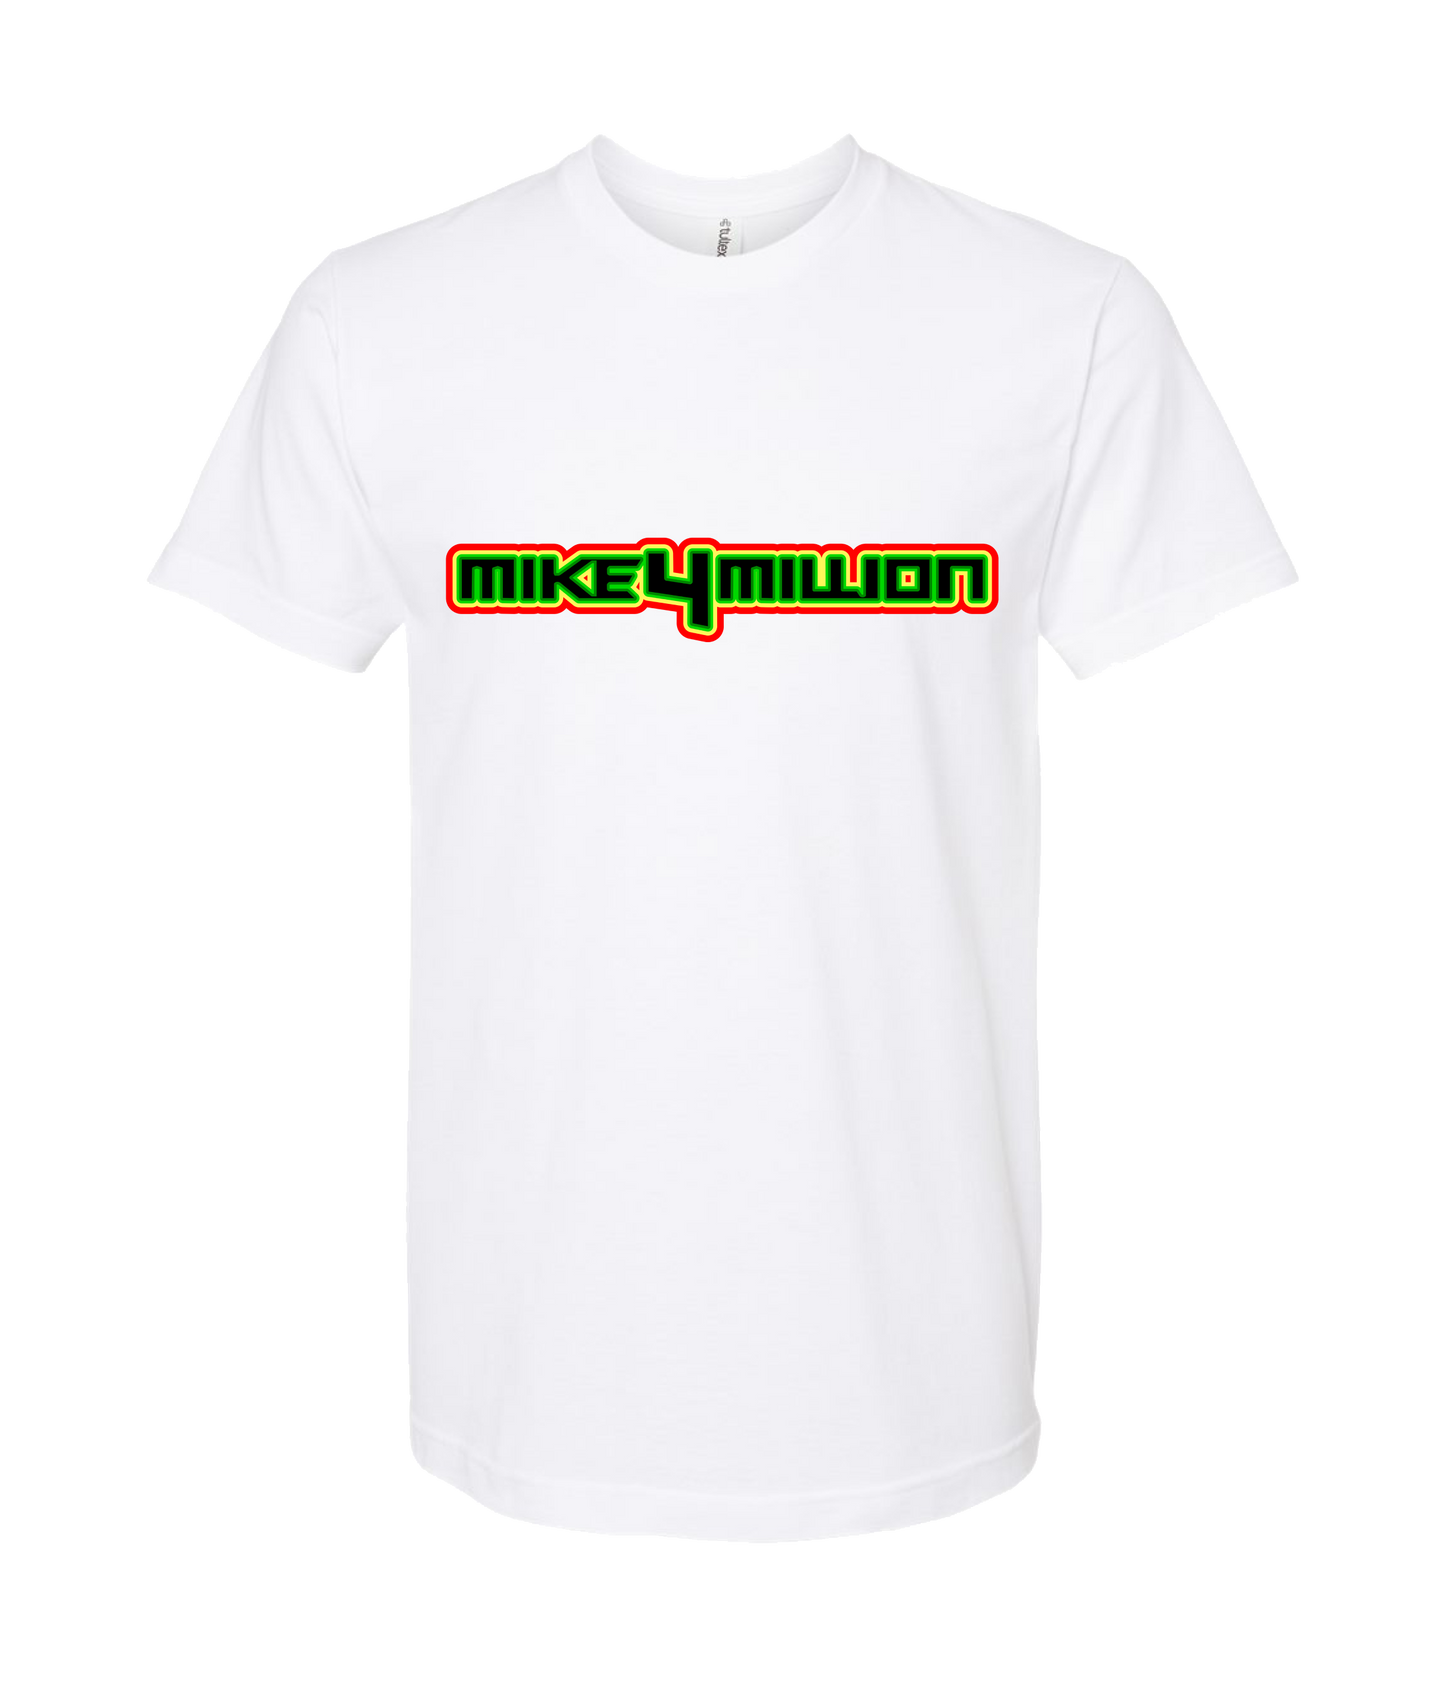 Mike4Million - DESIGN 1 - White T Shirt